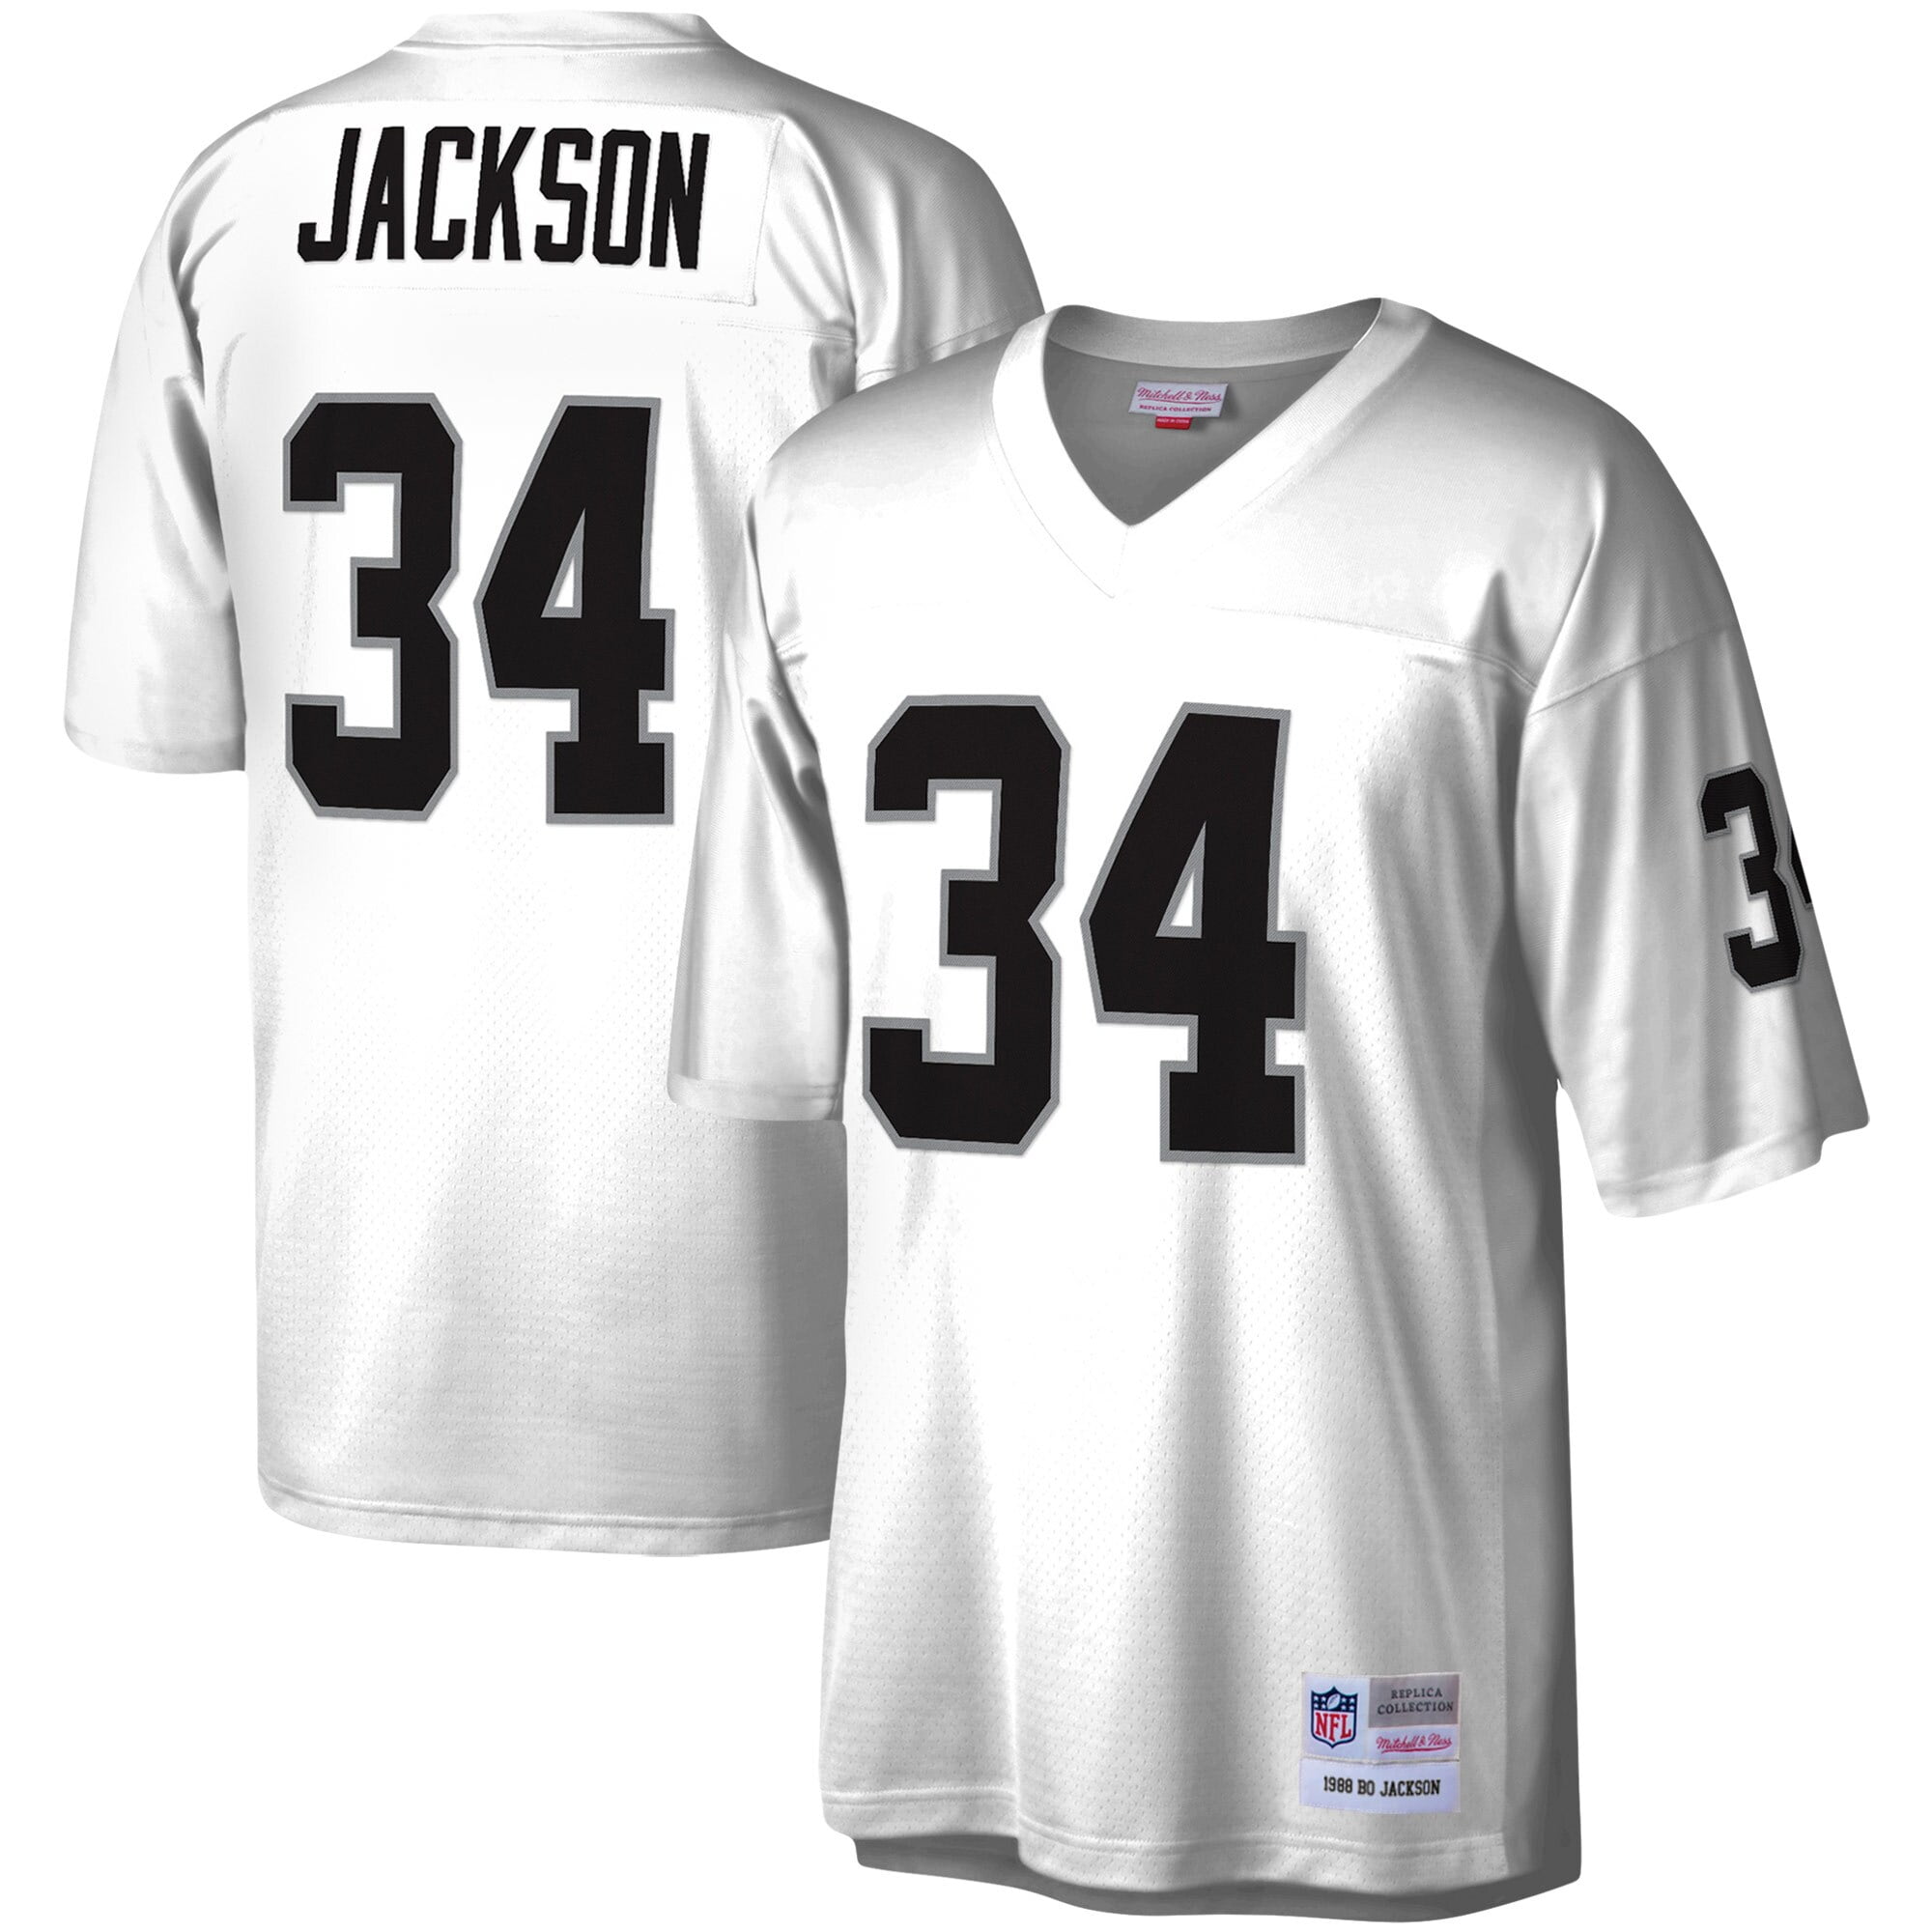 bo jackson jersey shirt, OFF 72%,Buy!